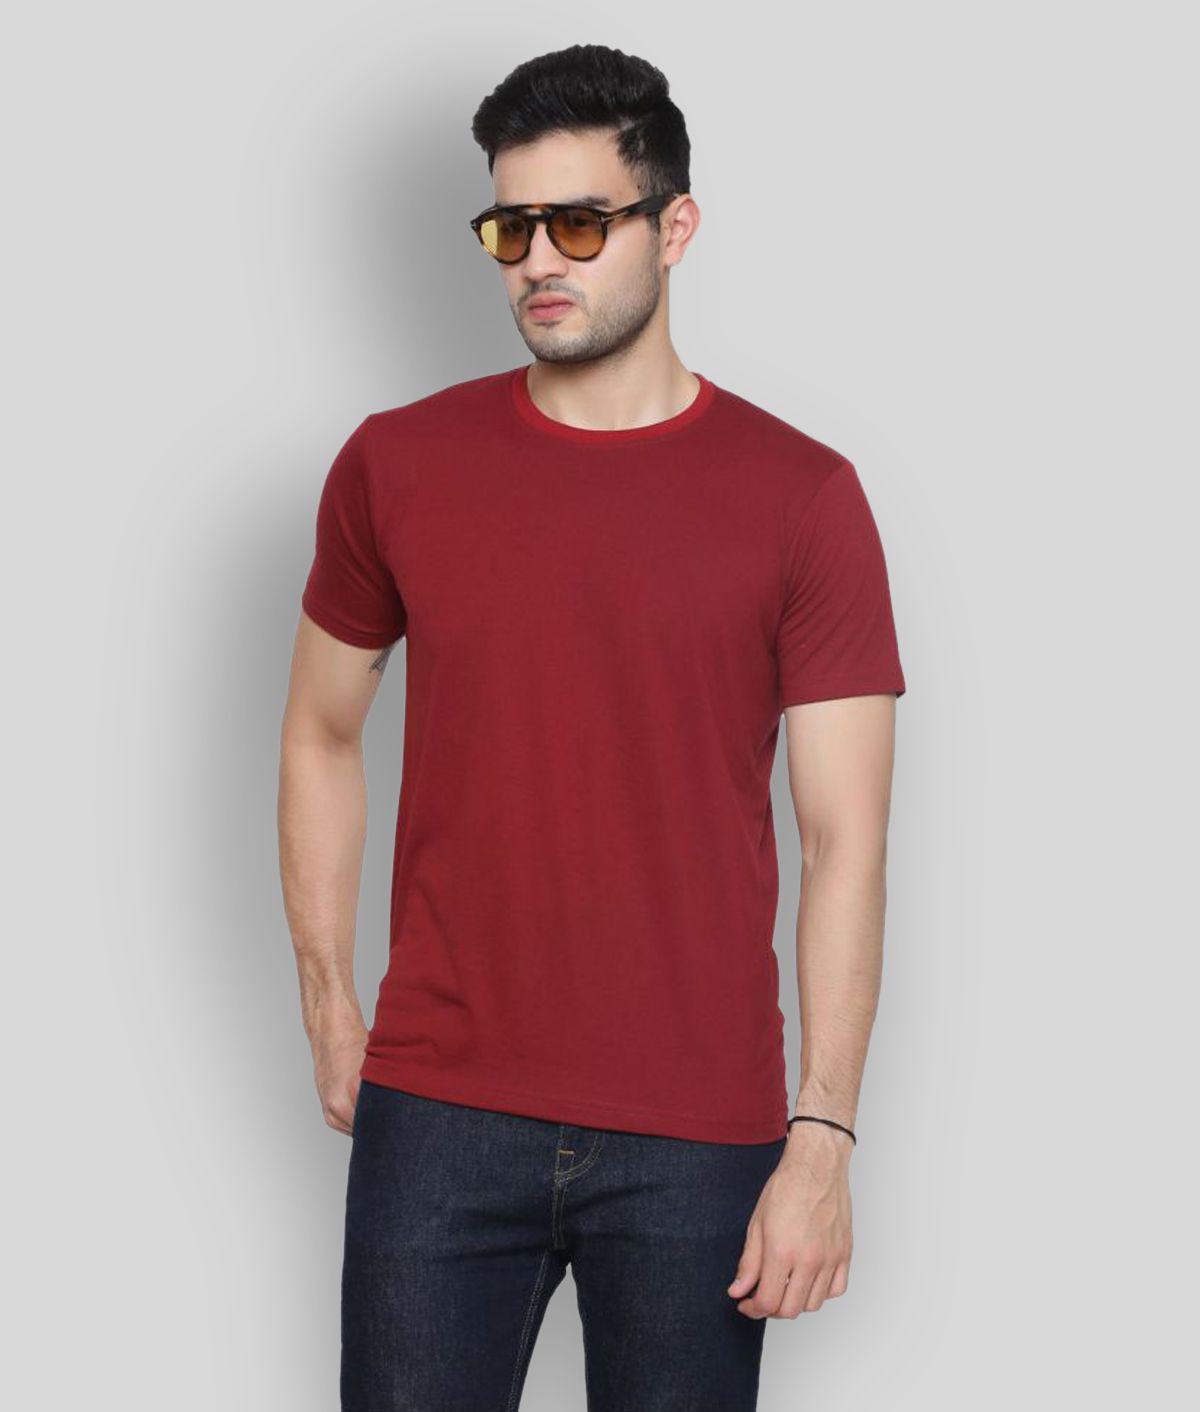     			GENTINO - Maroon Cotton Blend Regular Fit Men's T-Shirt ( Pack of 1 )